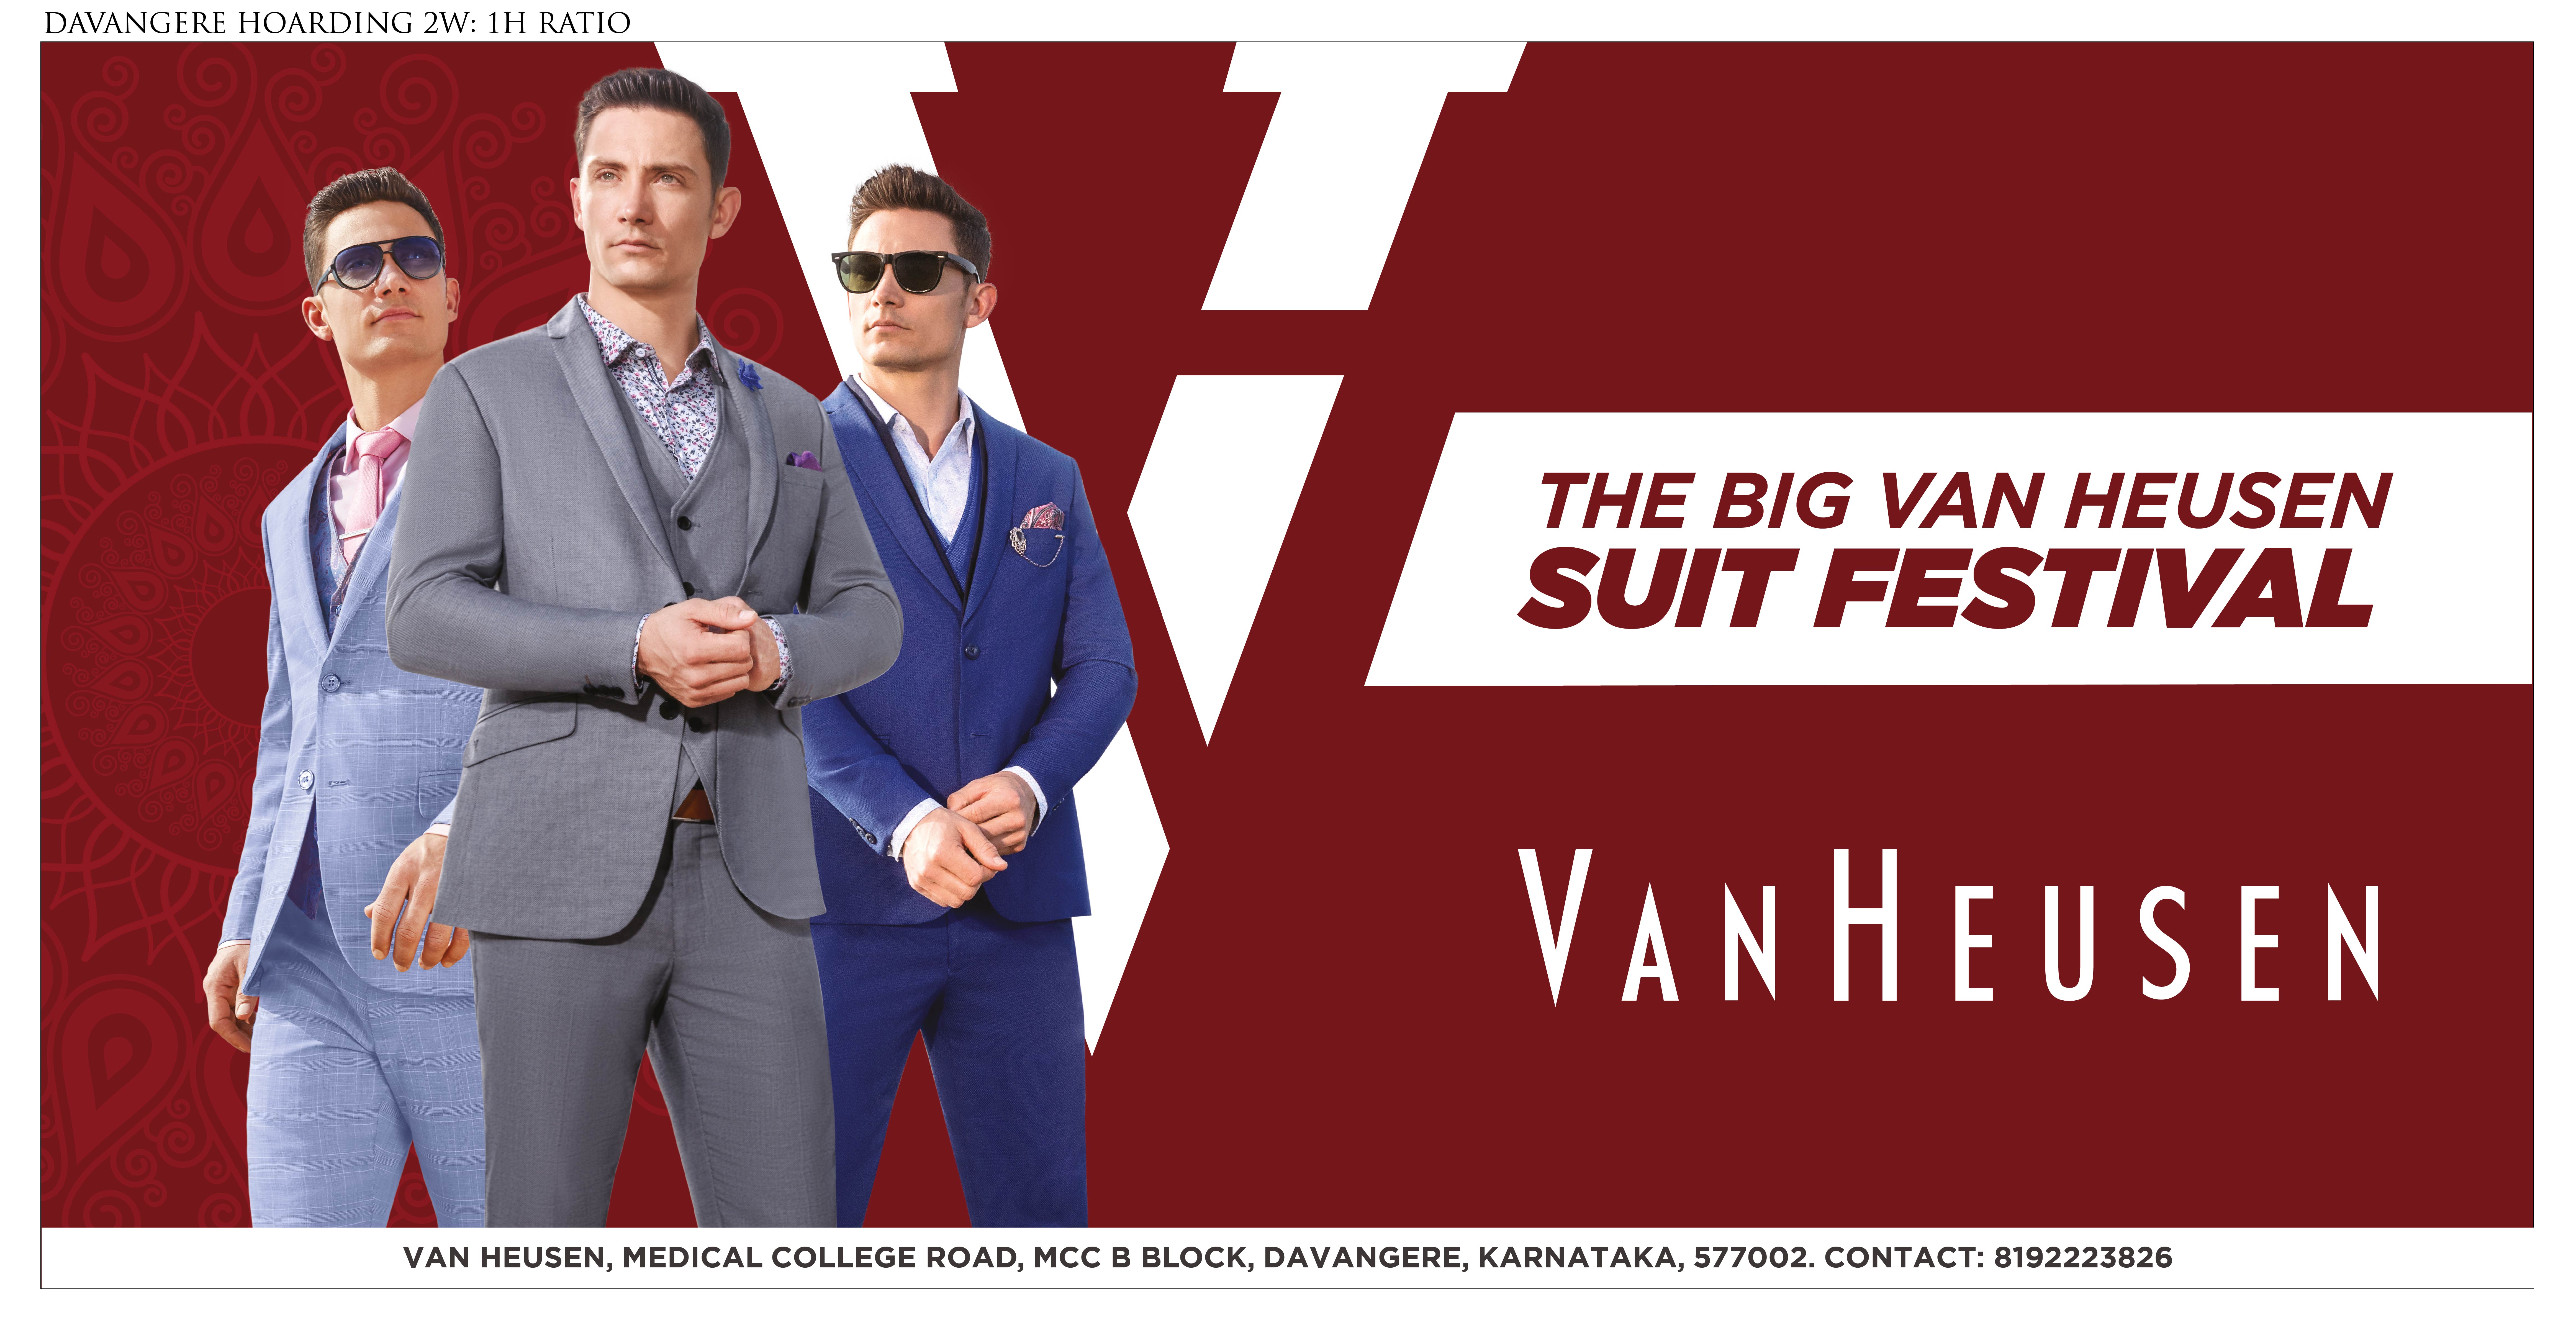 Own this festive season with The Big Van Heusen Suit Festival